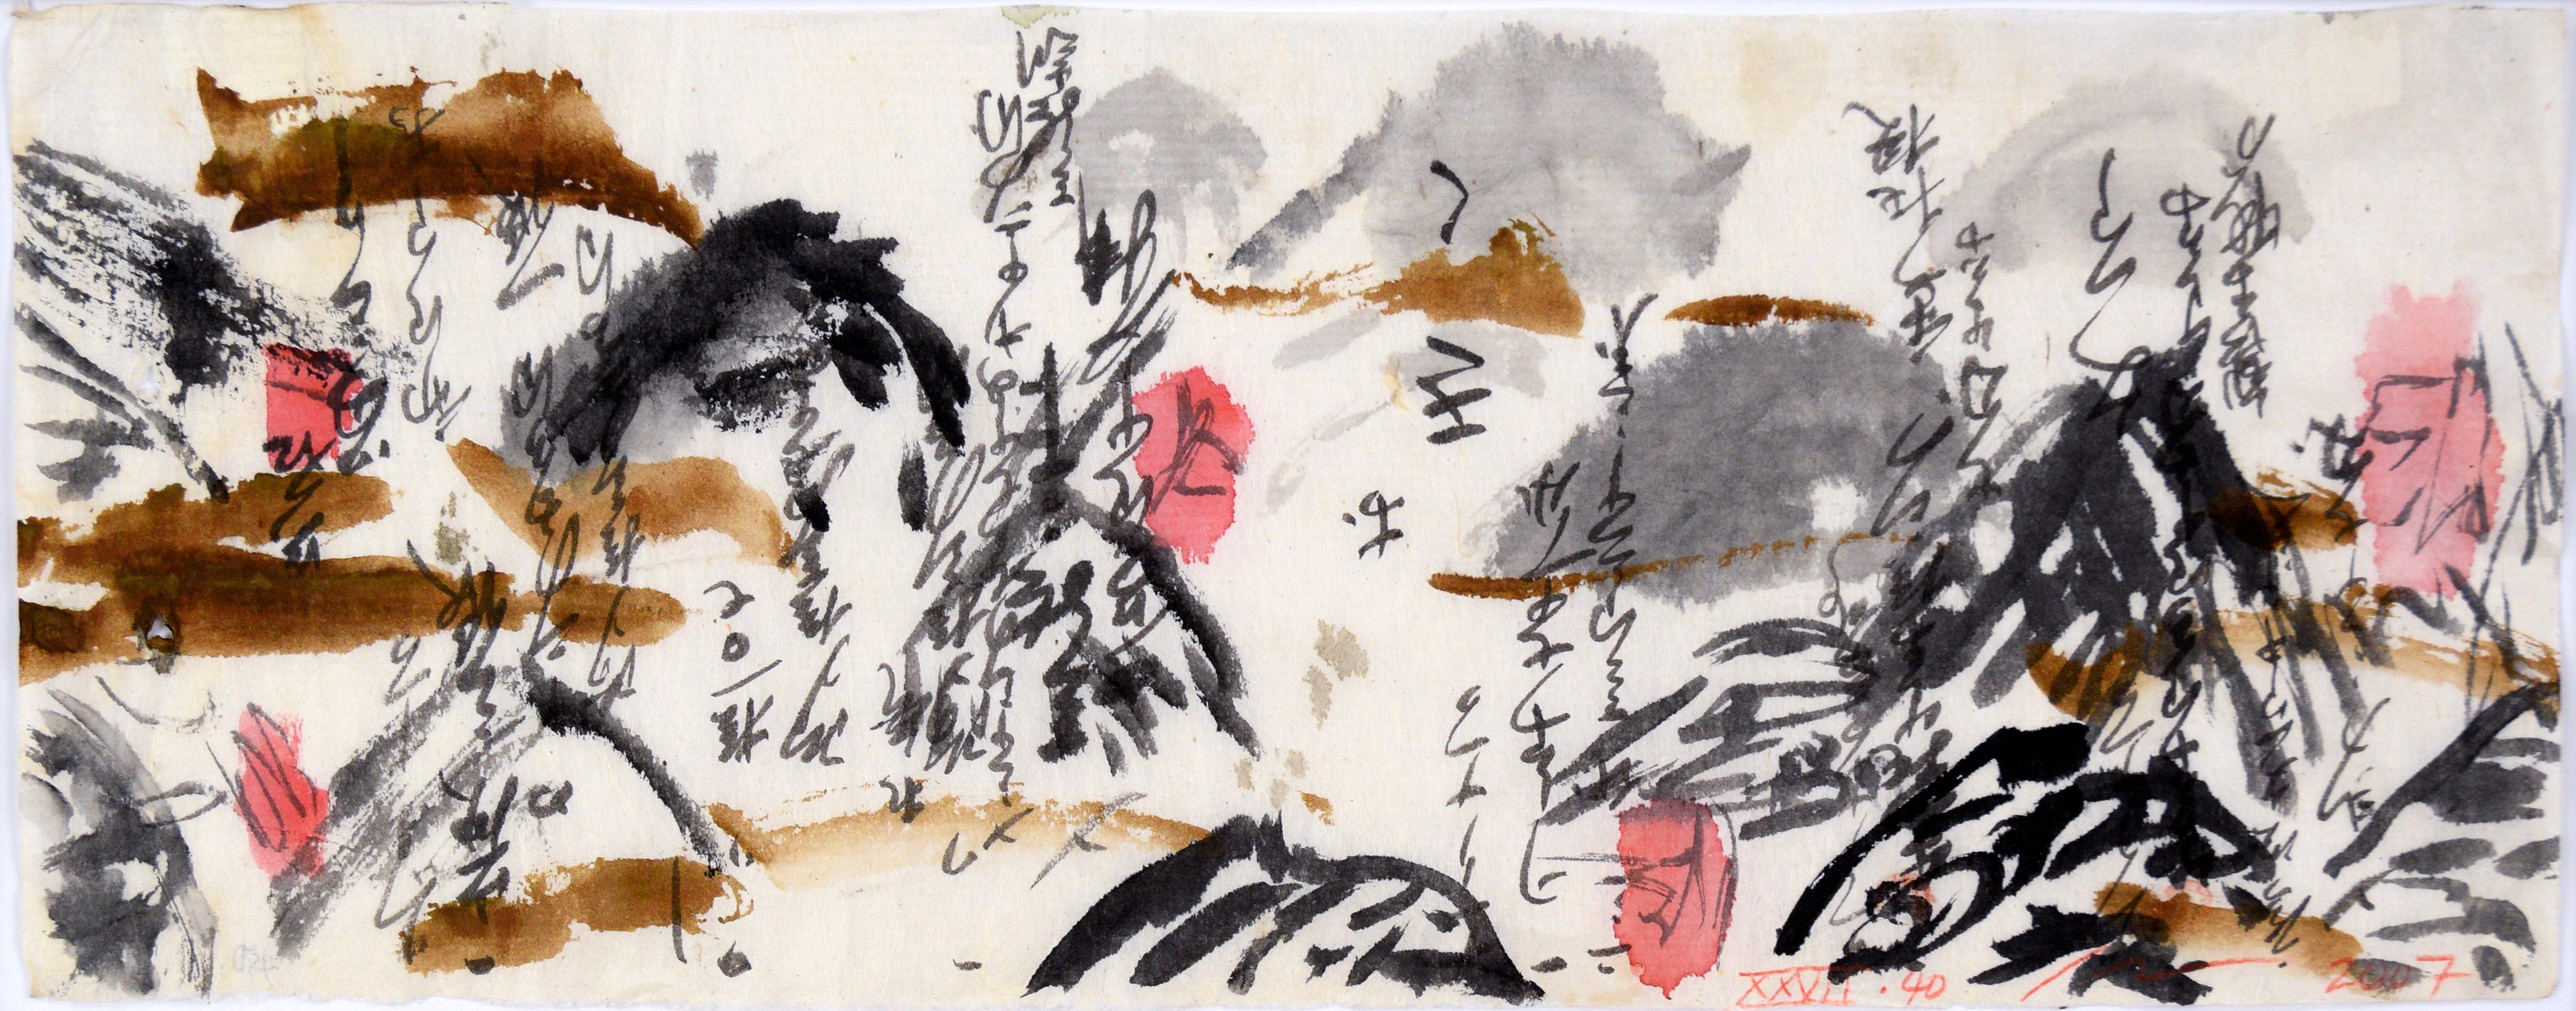 Abstraktes Panorama I – Kalligrafie auf Reispapier – Japanische Kalligrafie – Painting von Michael Pauker 